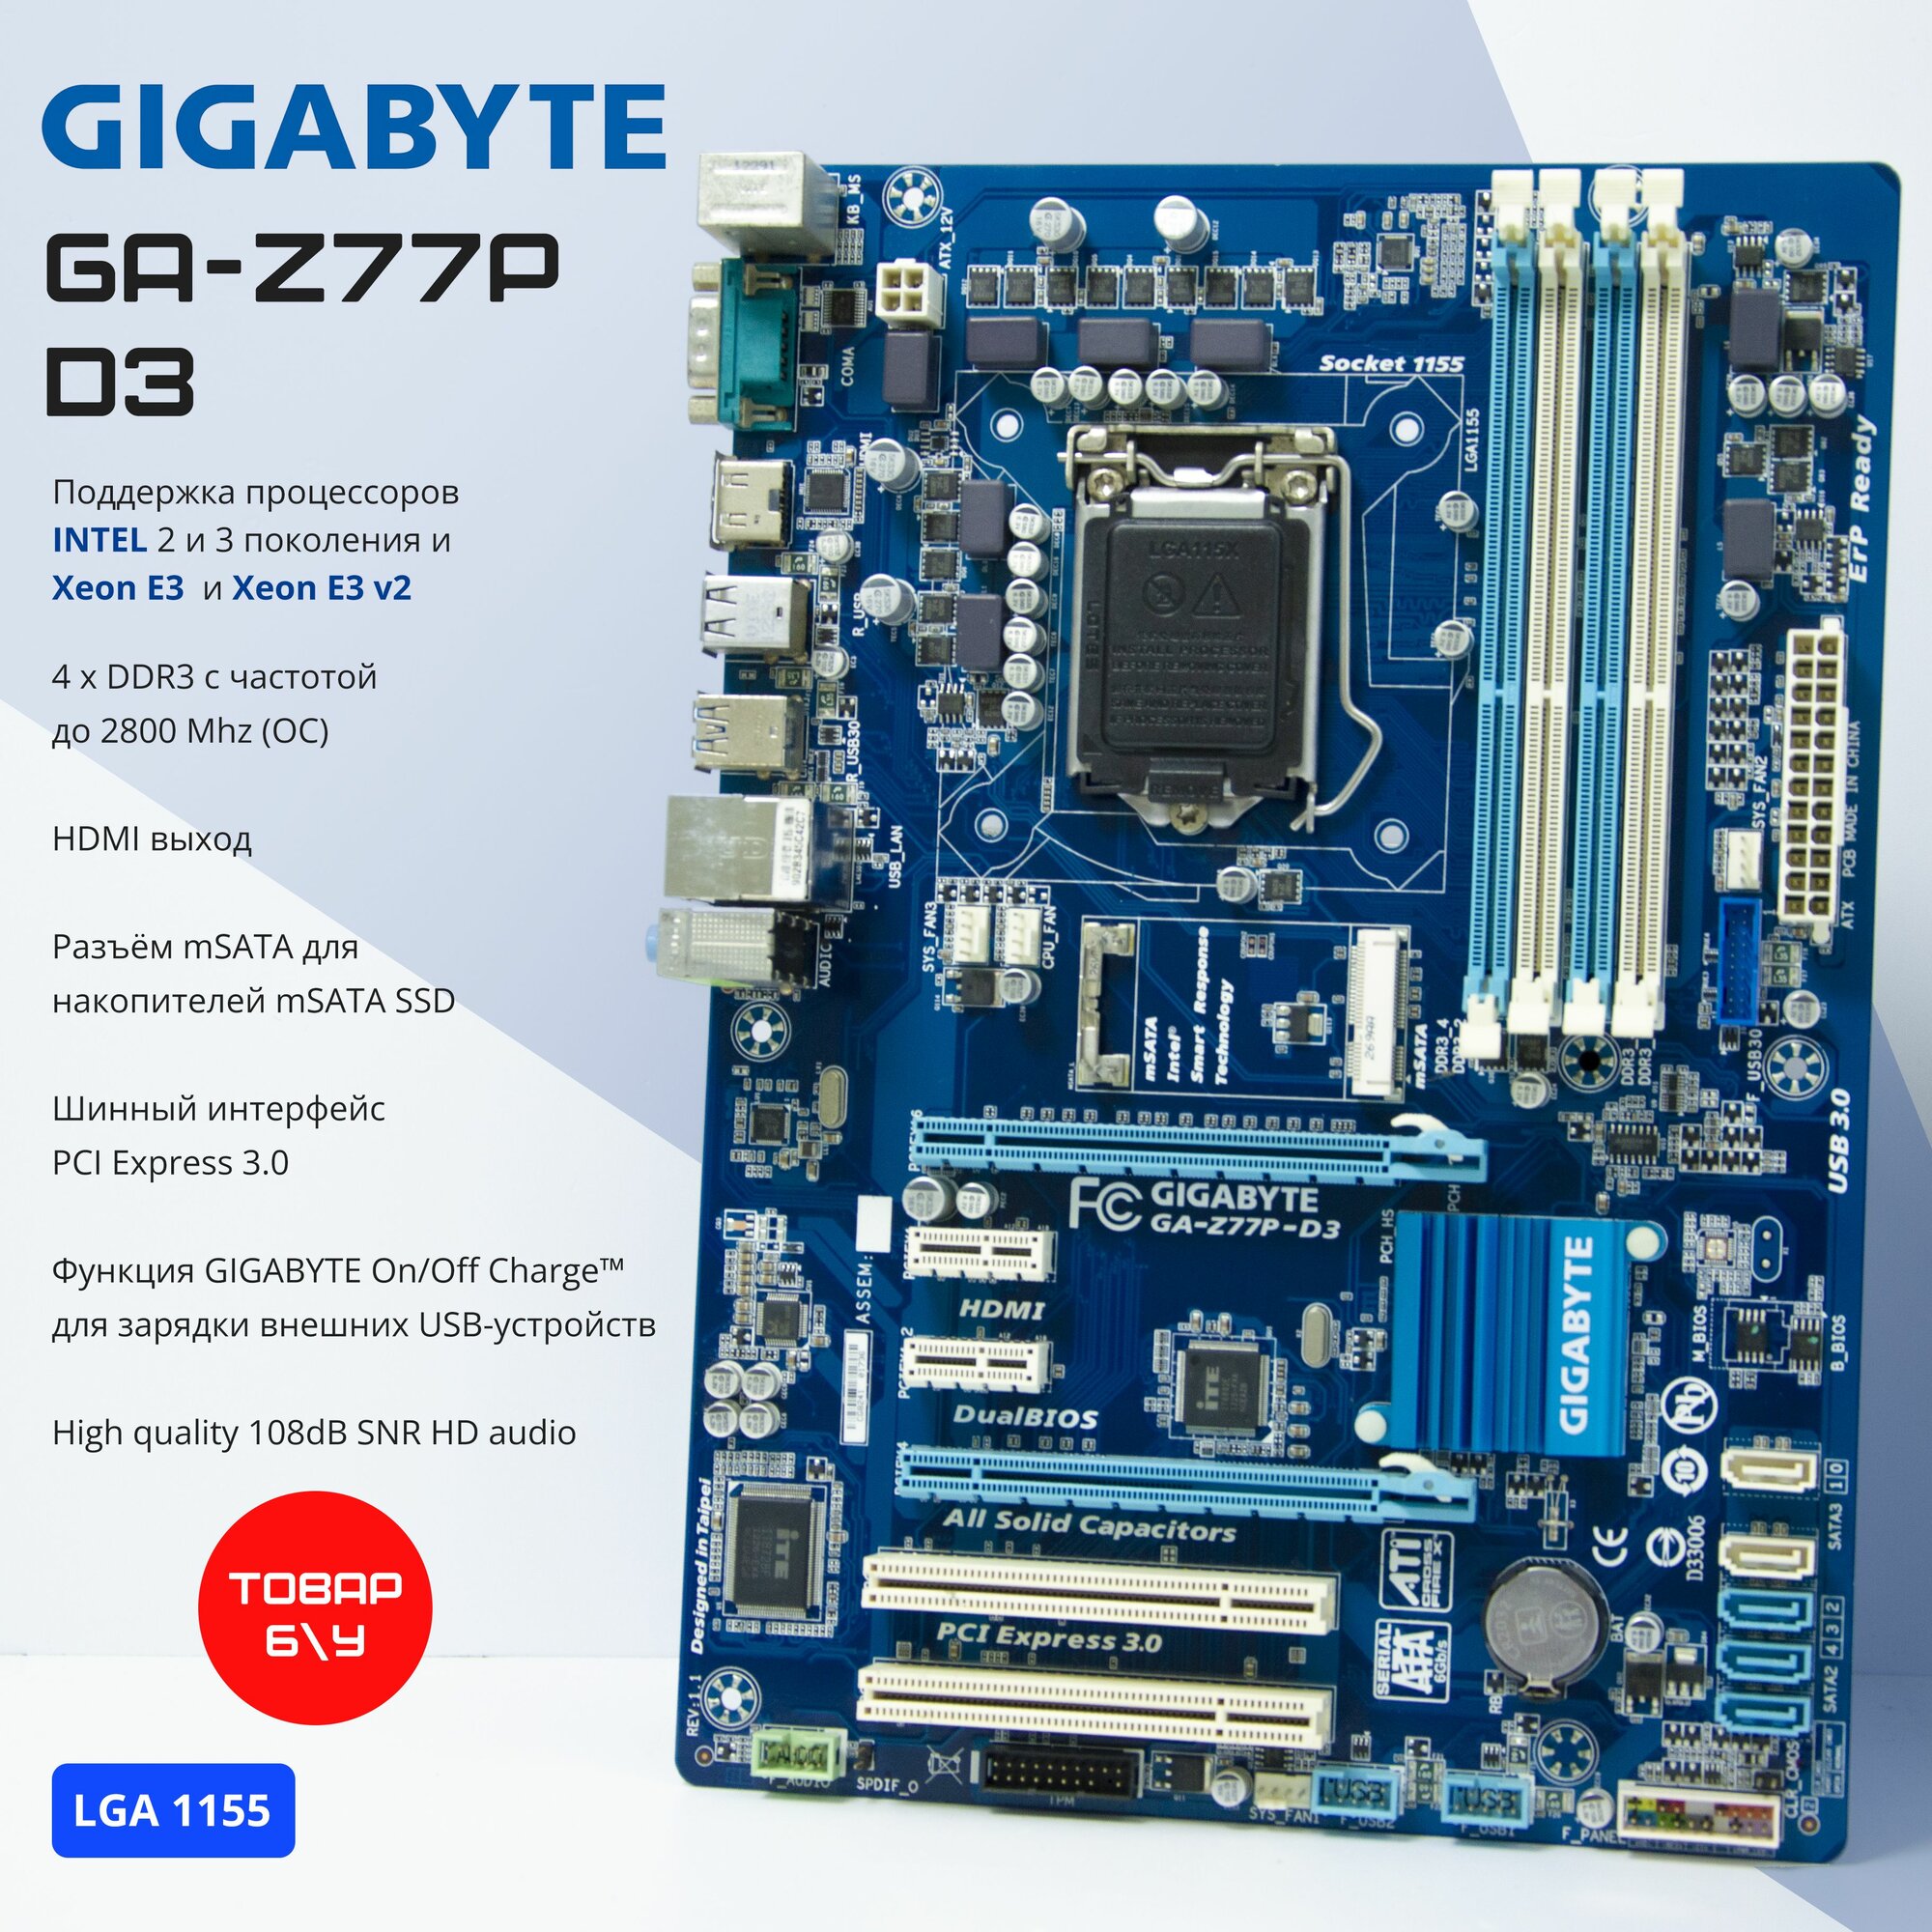 Материнская плата Gigabyte GA-Z77P-D3 LGA1155 DDR3 ATX